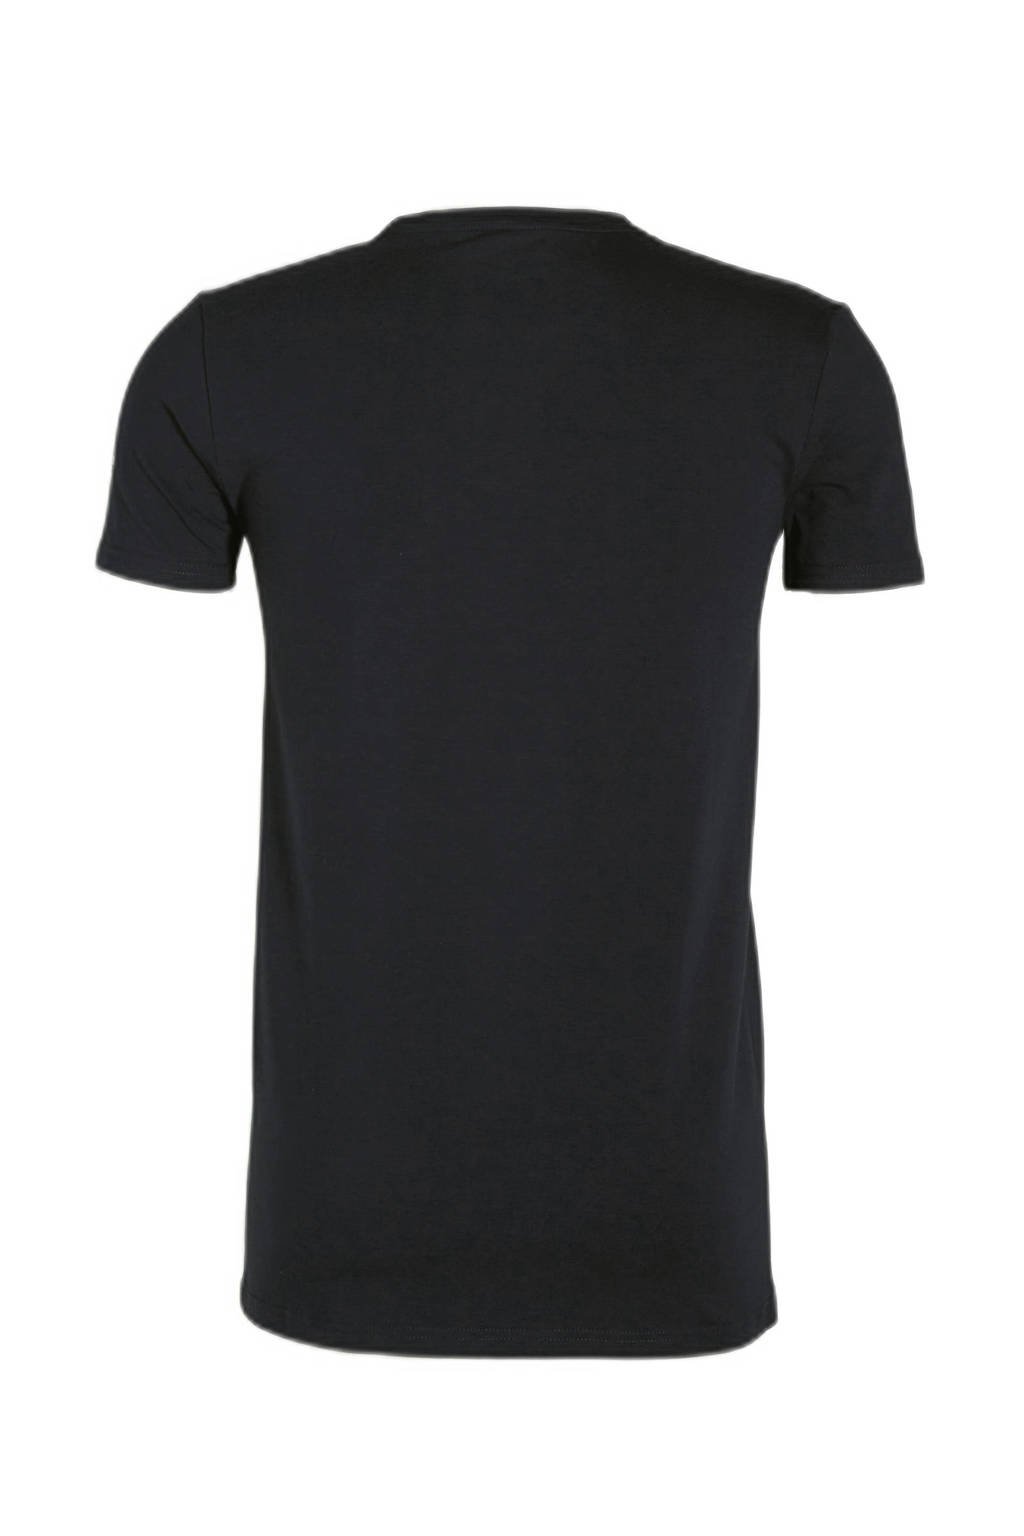 Attent Moet gelei PME Legend basic T-shirt (set van 2) 999 black | wehkamp